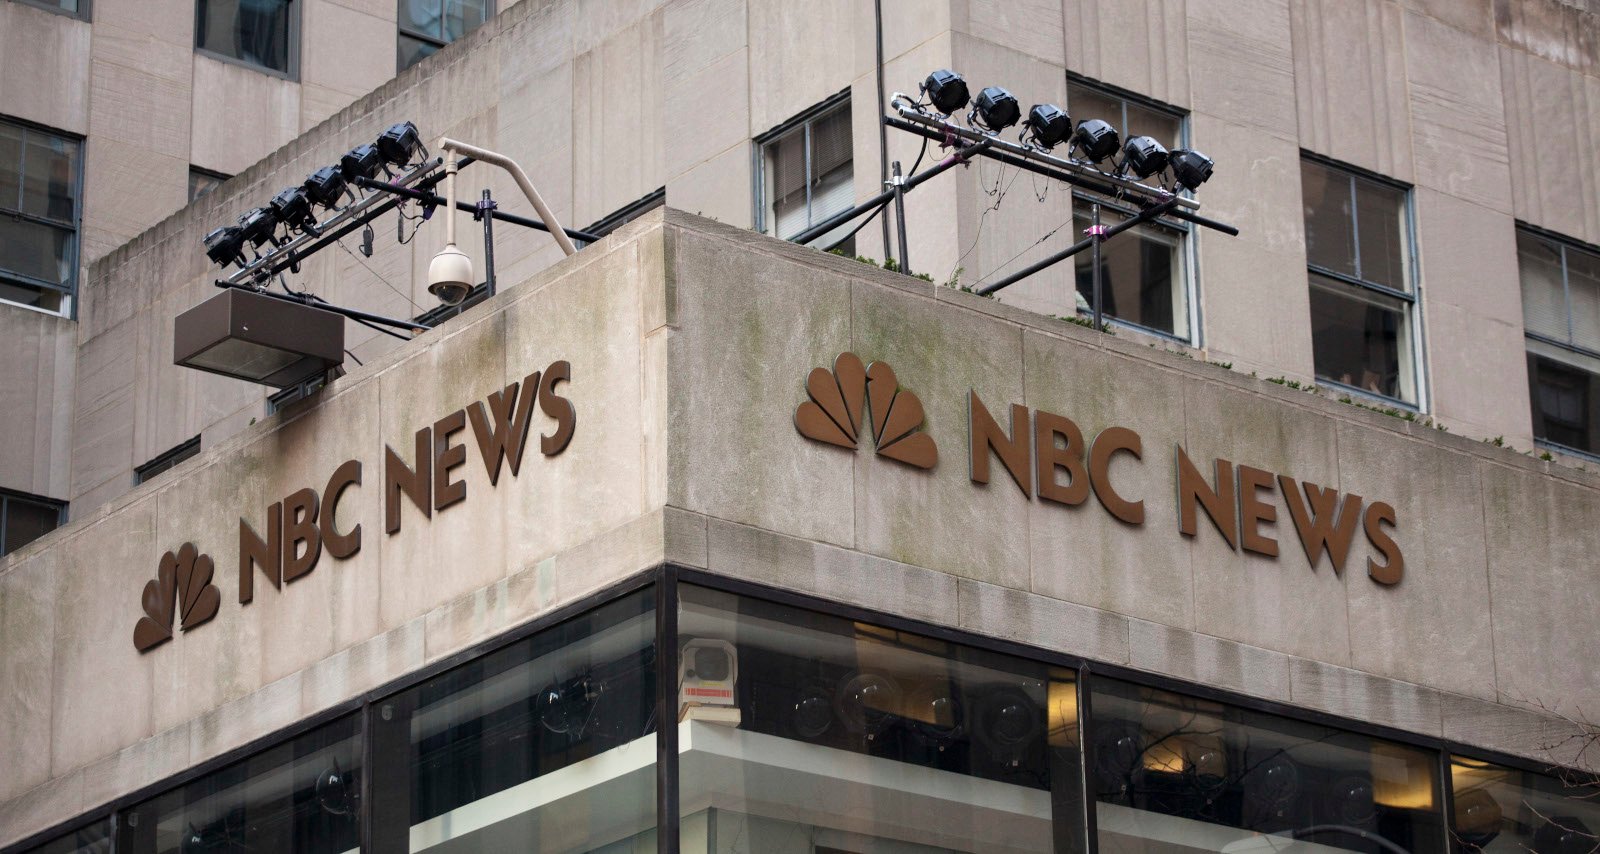 Marianna Sotomayor Wiki: Facts about NBC News' Associate Producer